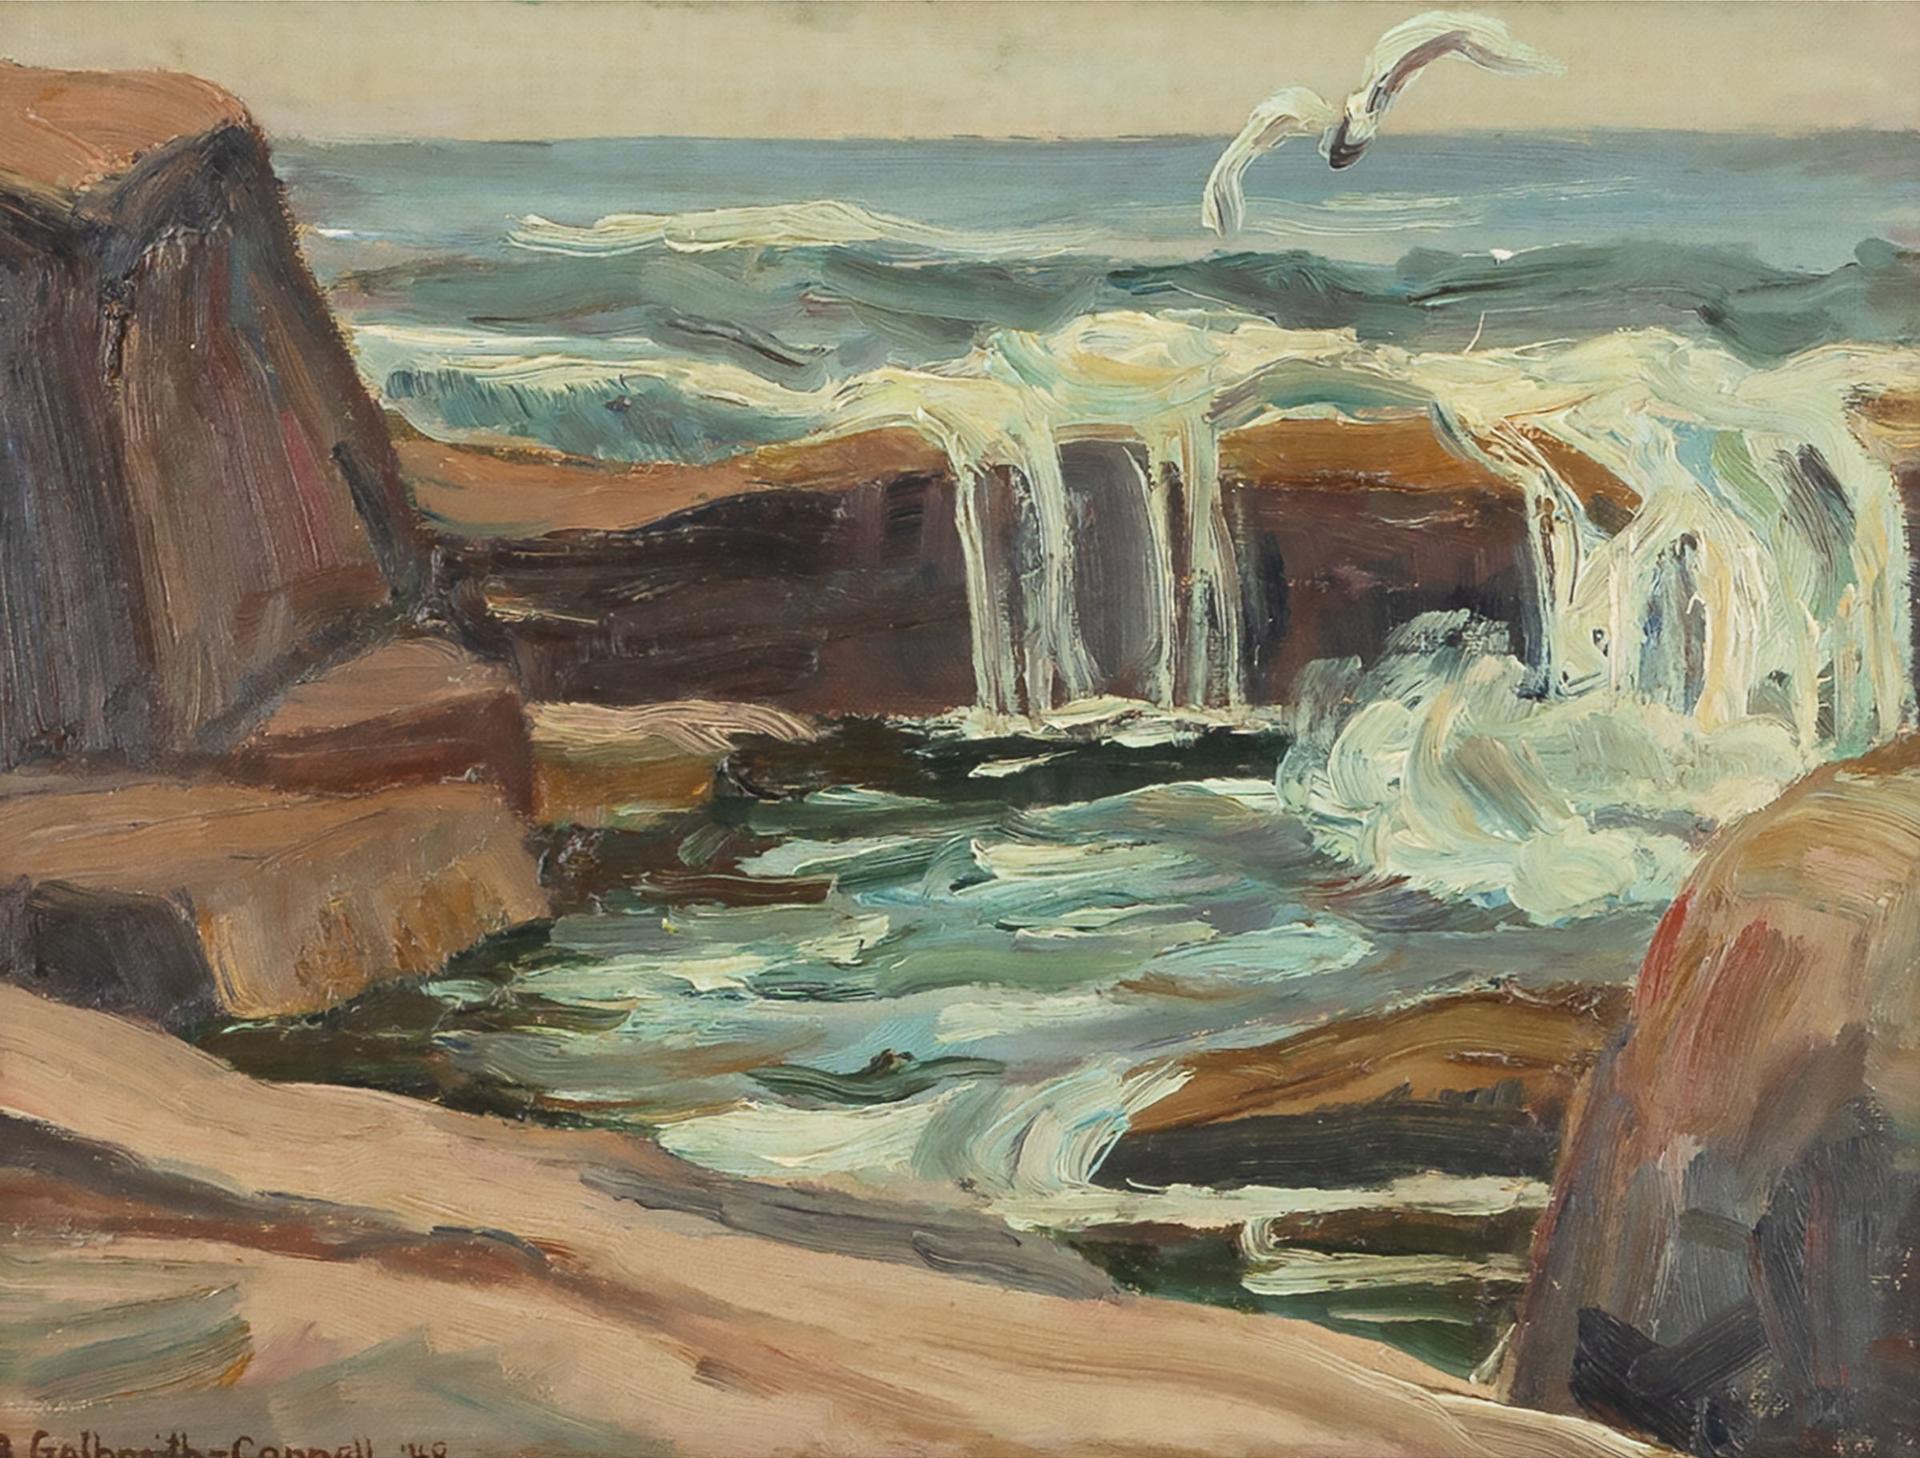 Elizabeth Roberta (Betty) Galbraith-Cornell (1917) - SURF, 1948